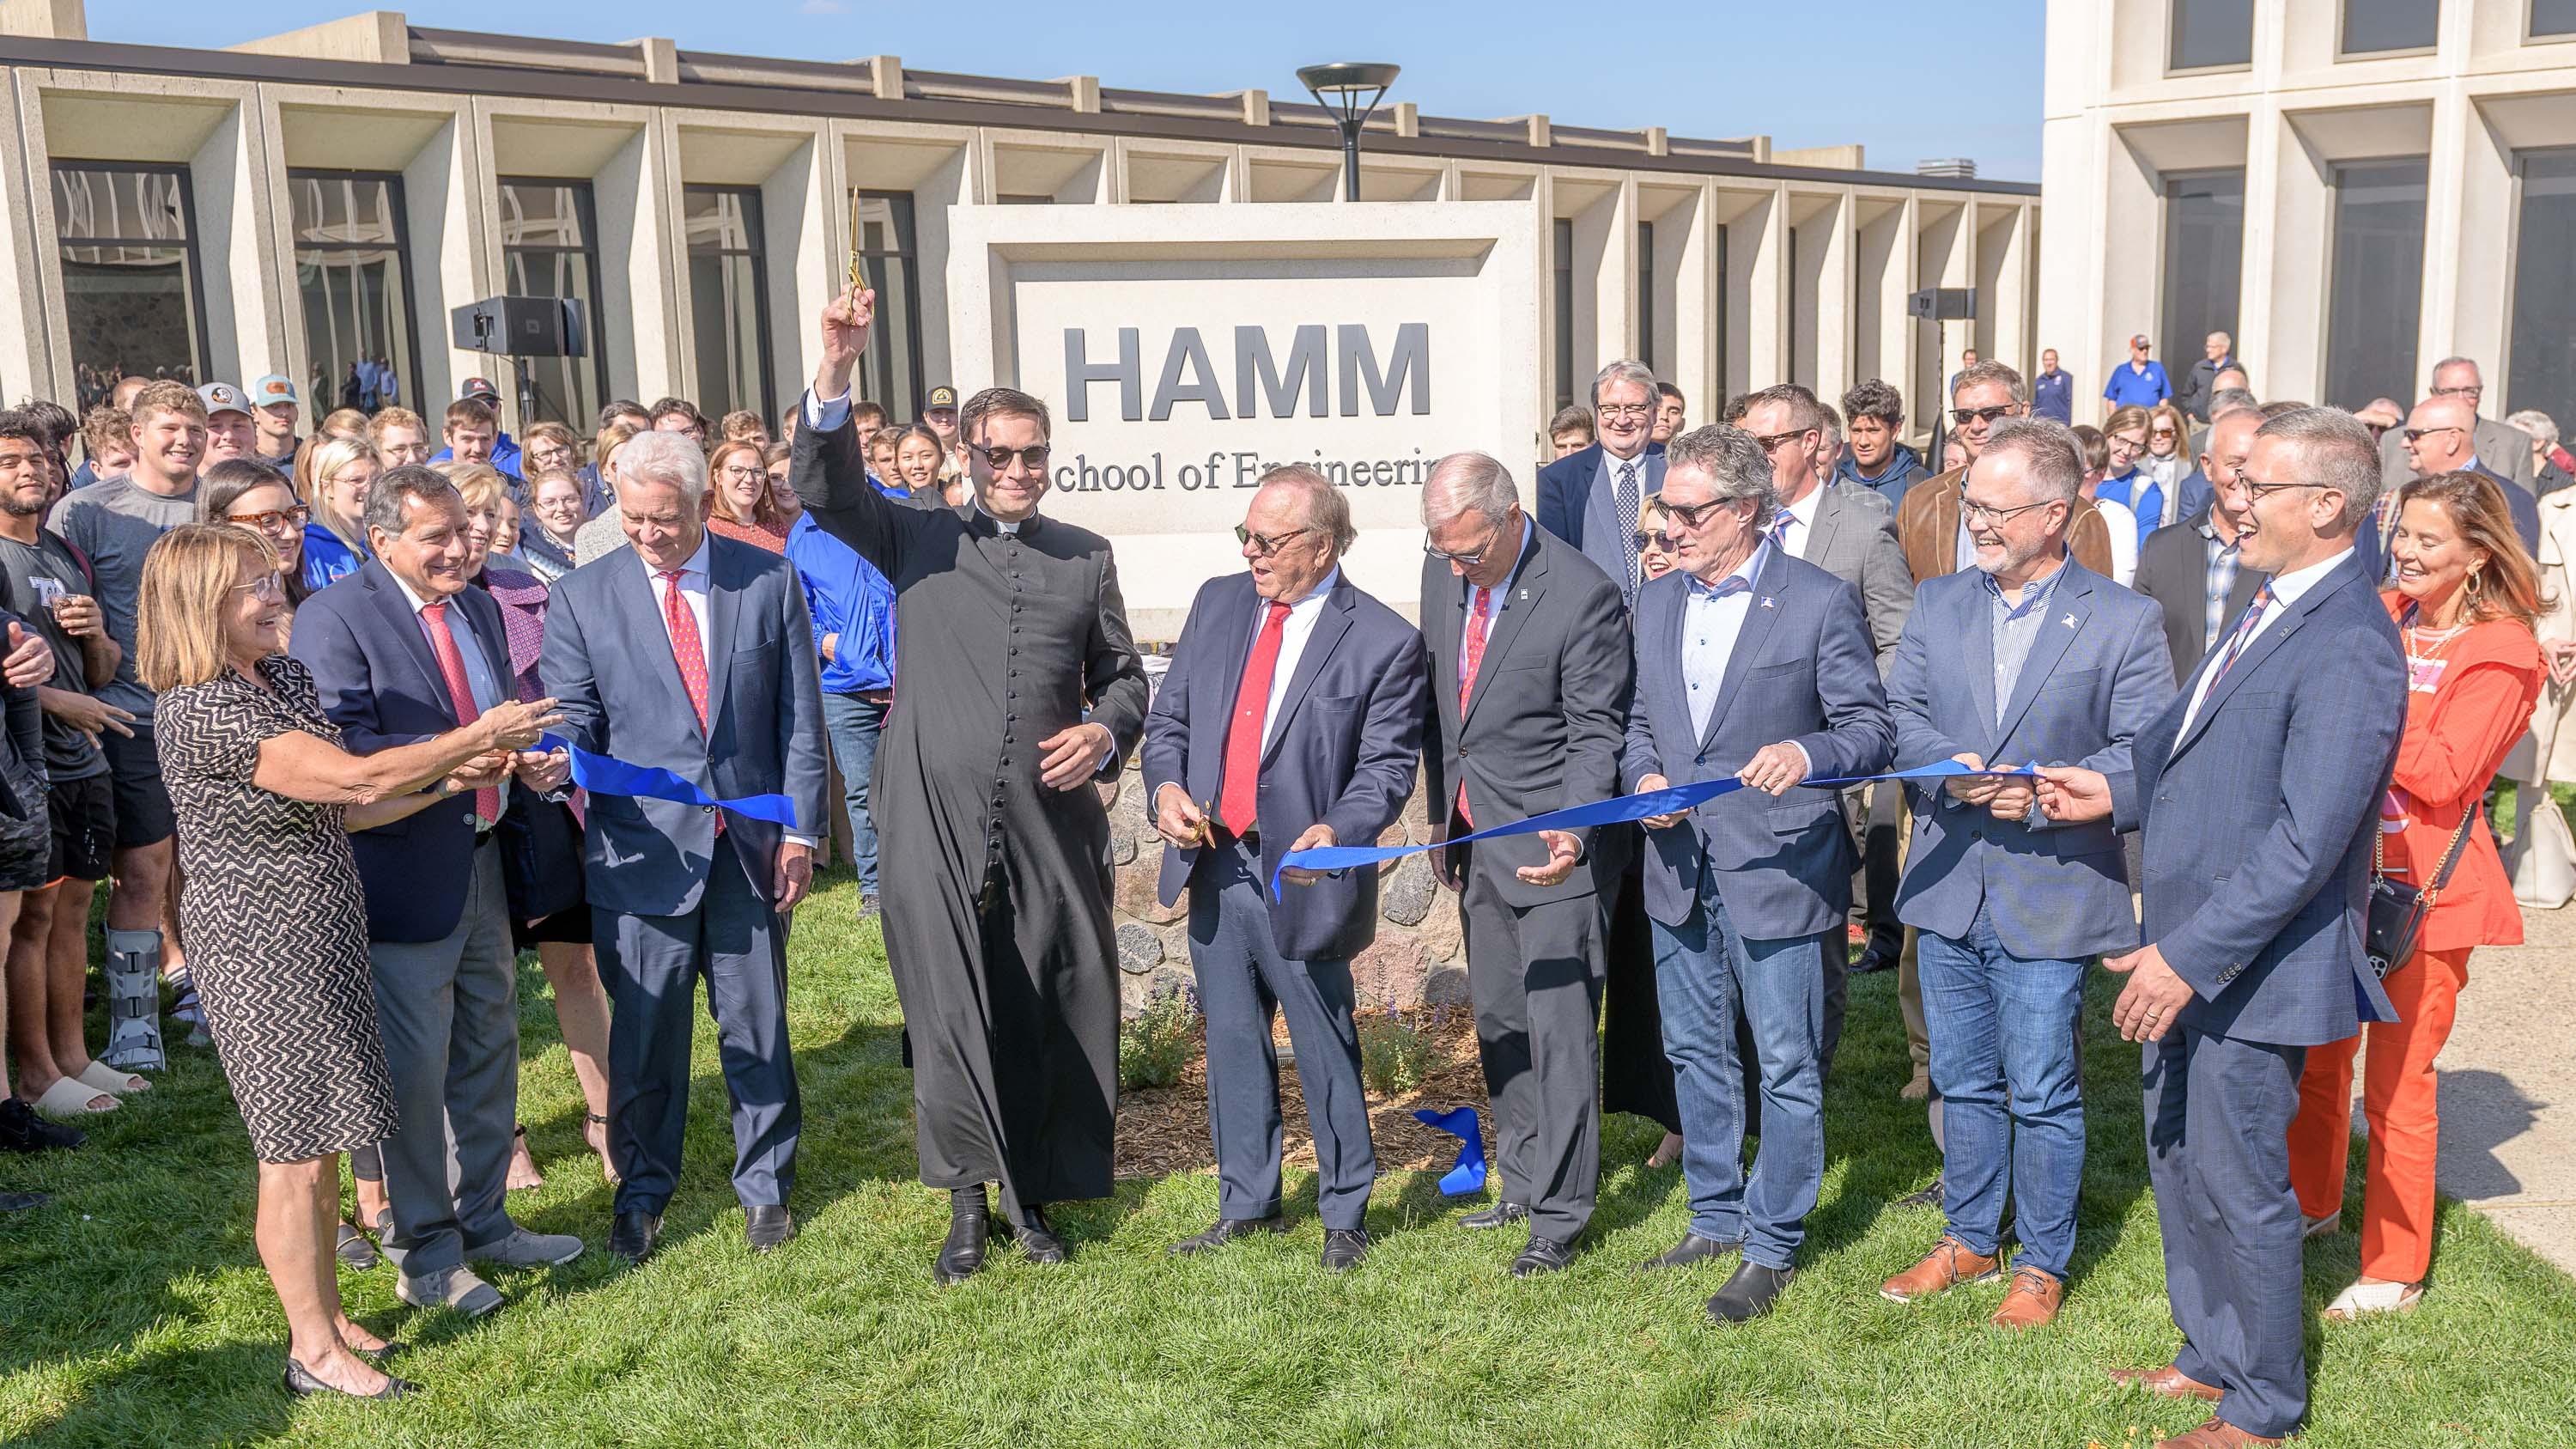 Monsignor Shea and Harold Hamm cutting the ribbon of the Hamm School of Engineering.